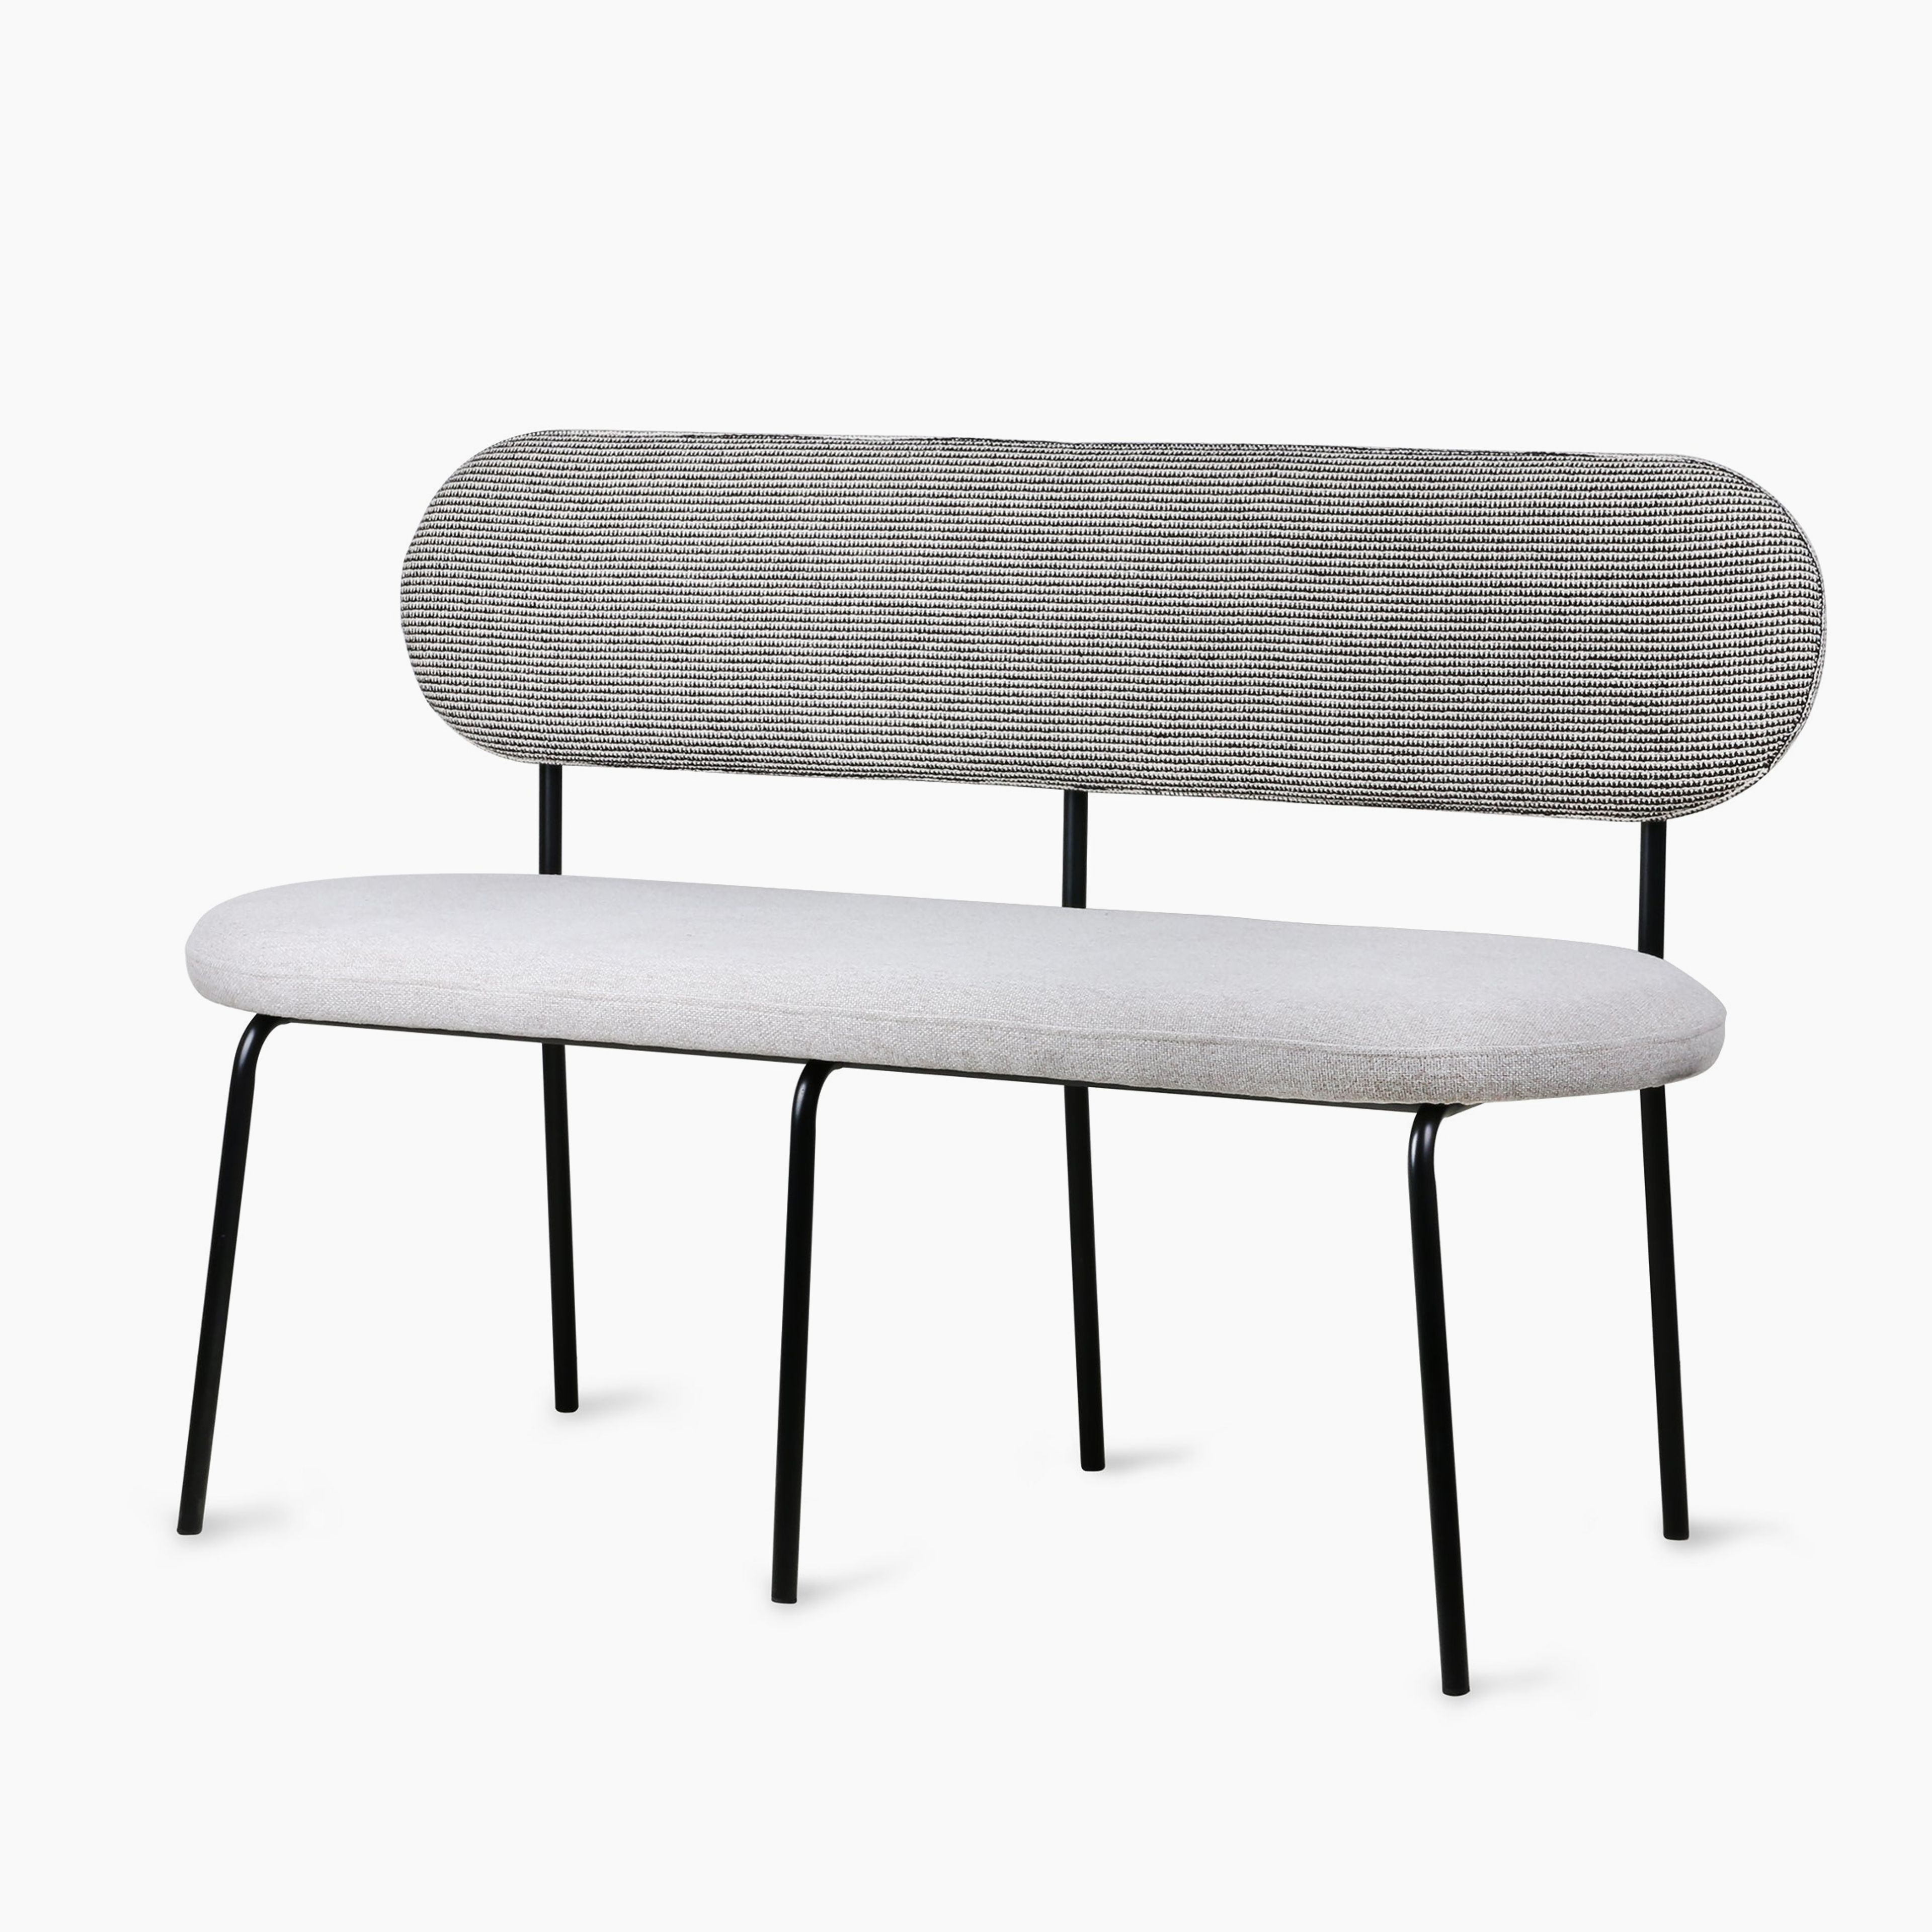 Mid century modern style bench - grey fabric